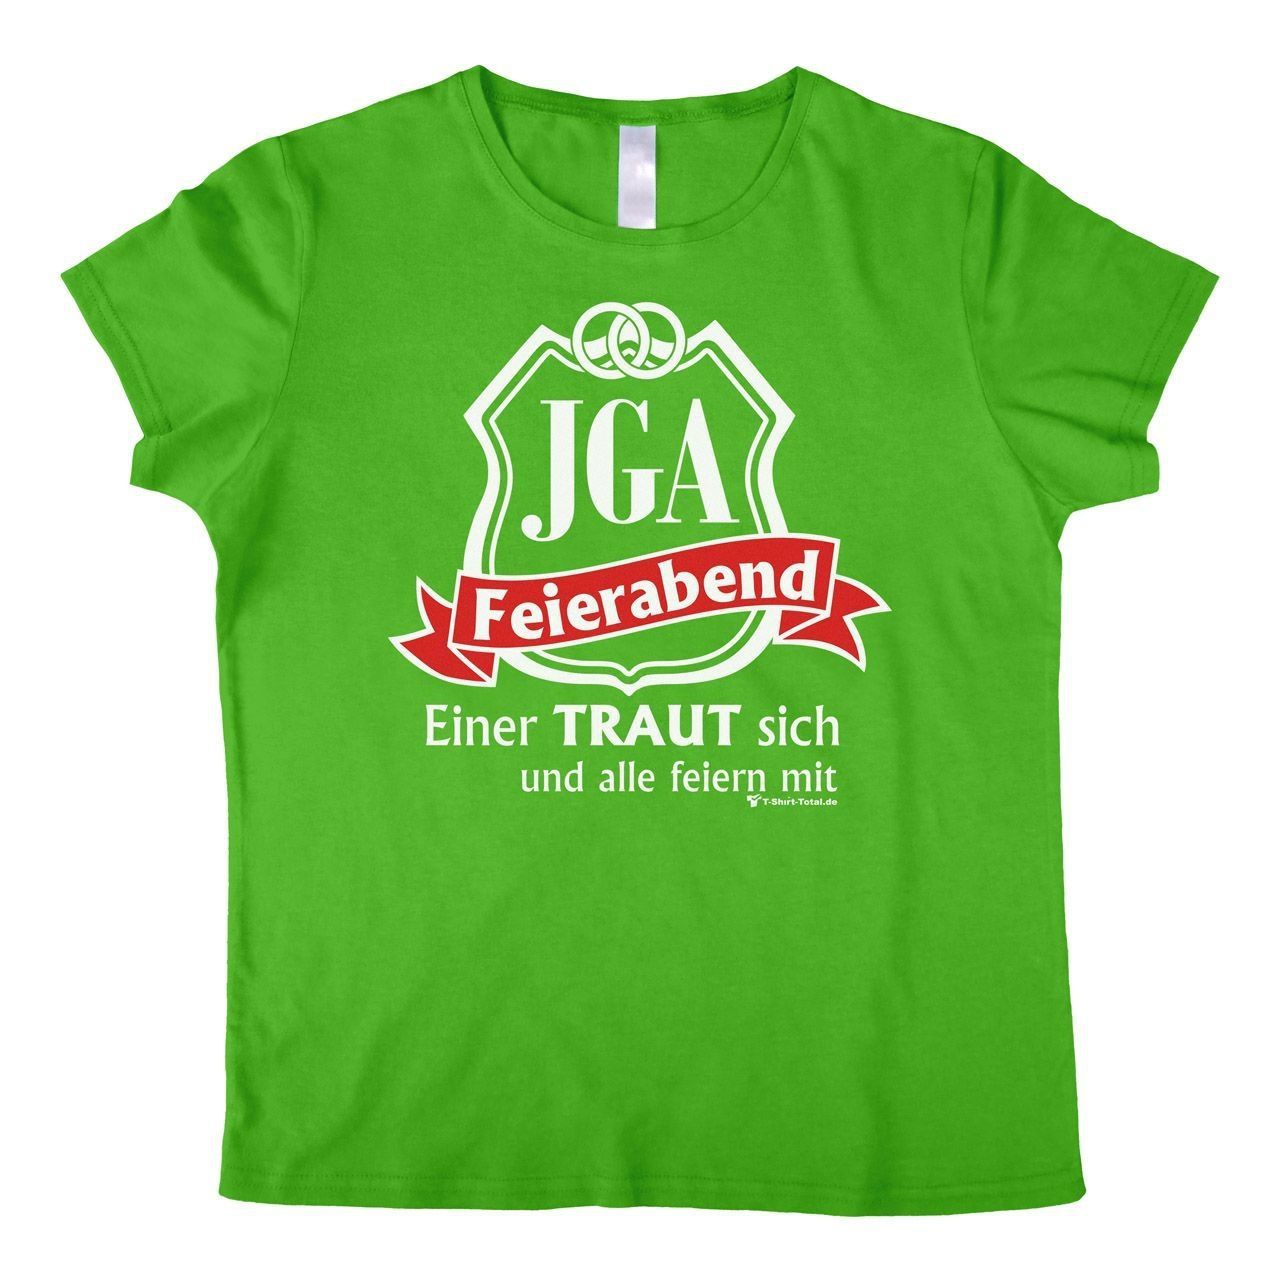 JGA Feierabend Woman T-Shirt grün Small